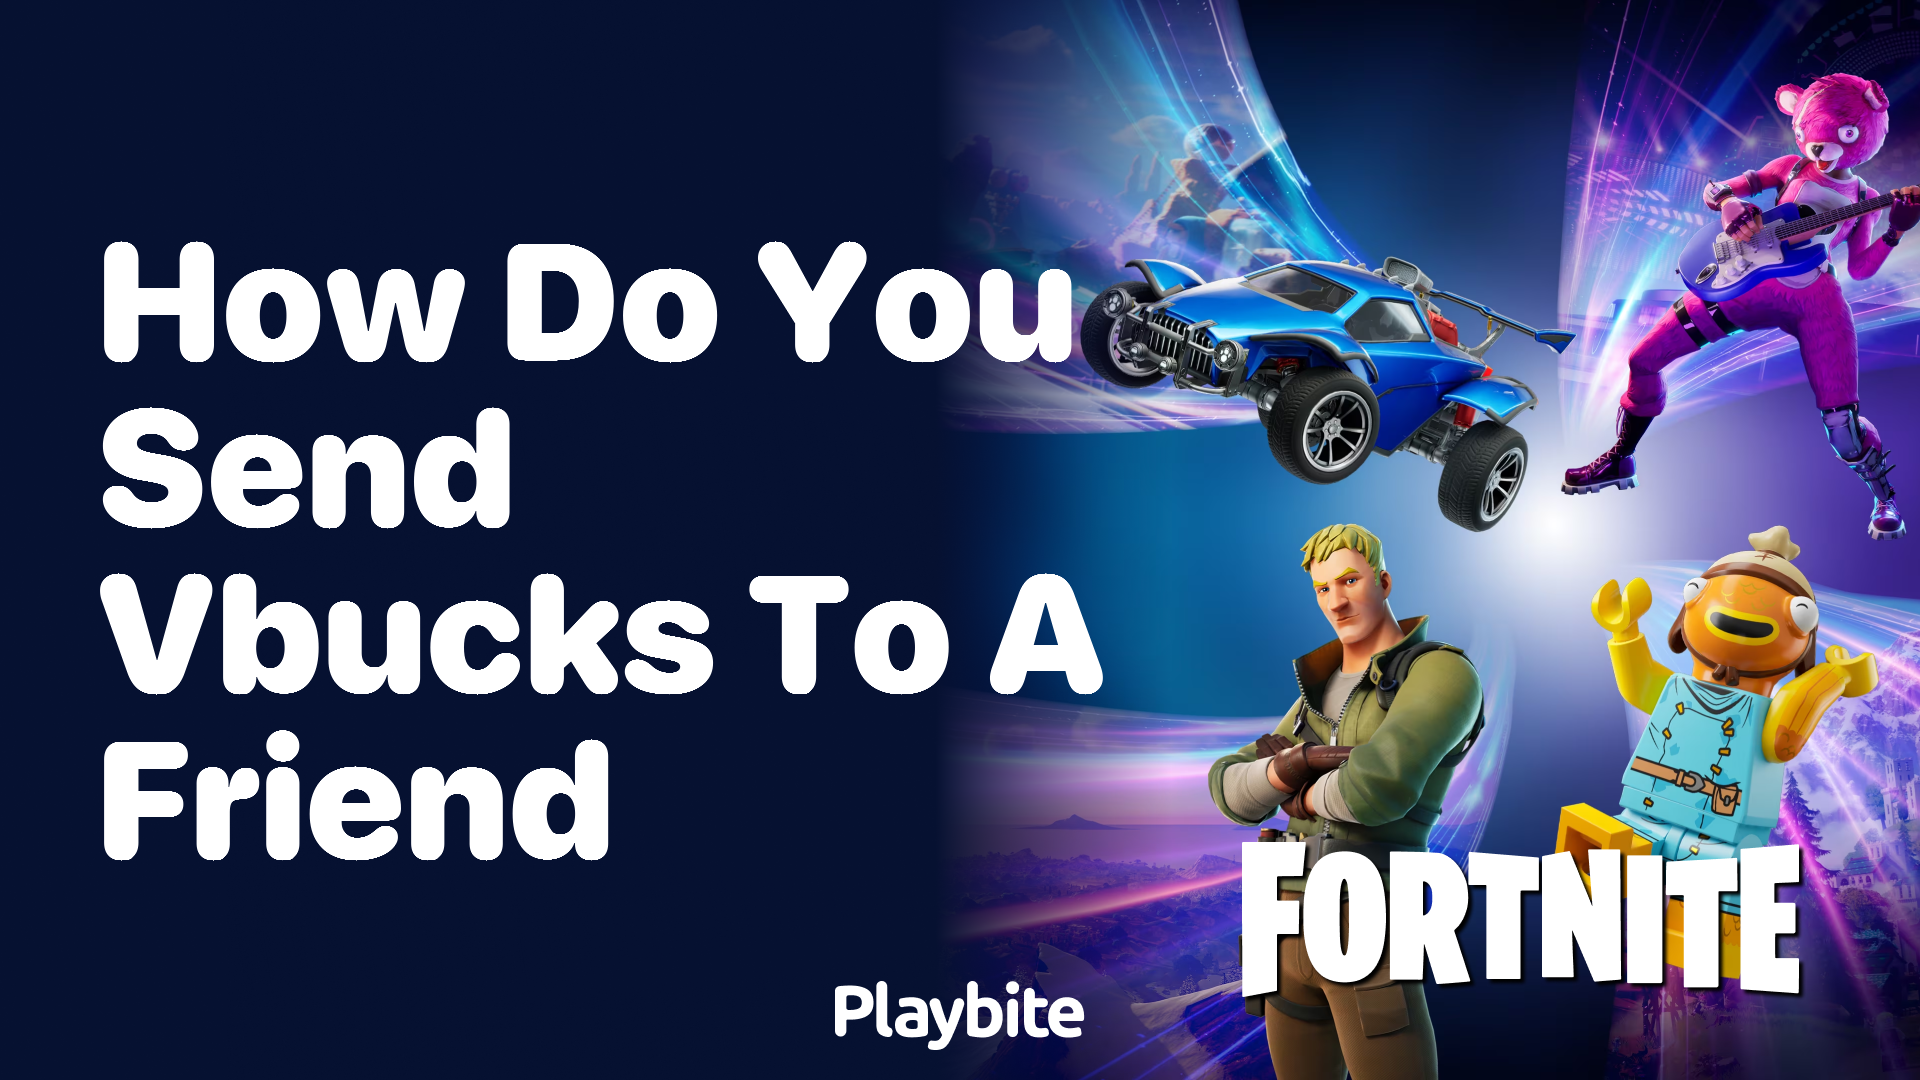 How do you send V-Bucks to a friend in Fortnite?